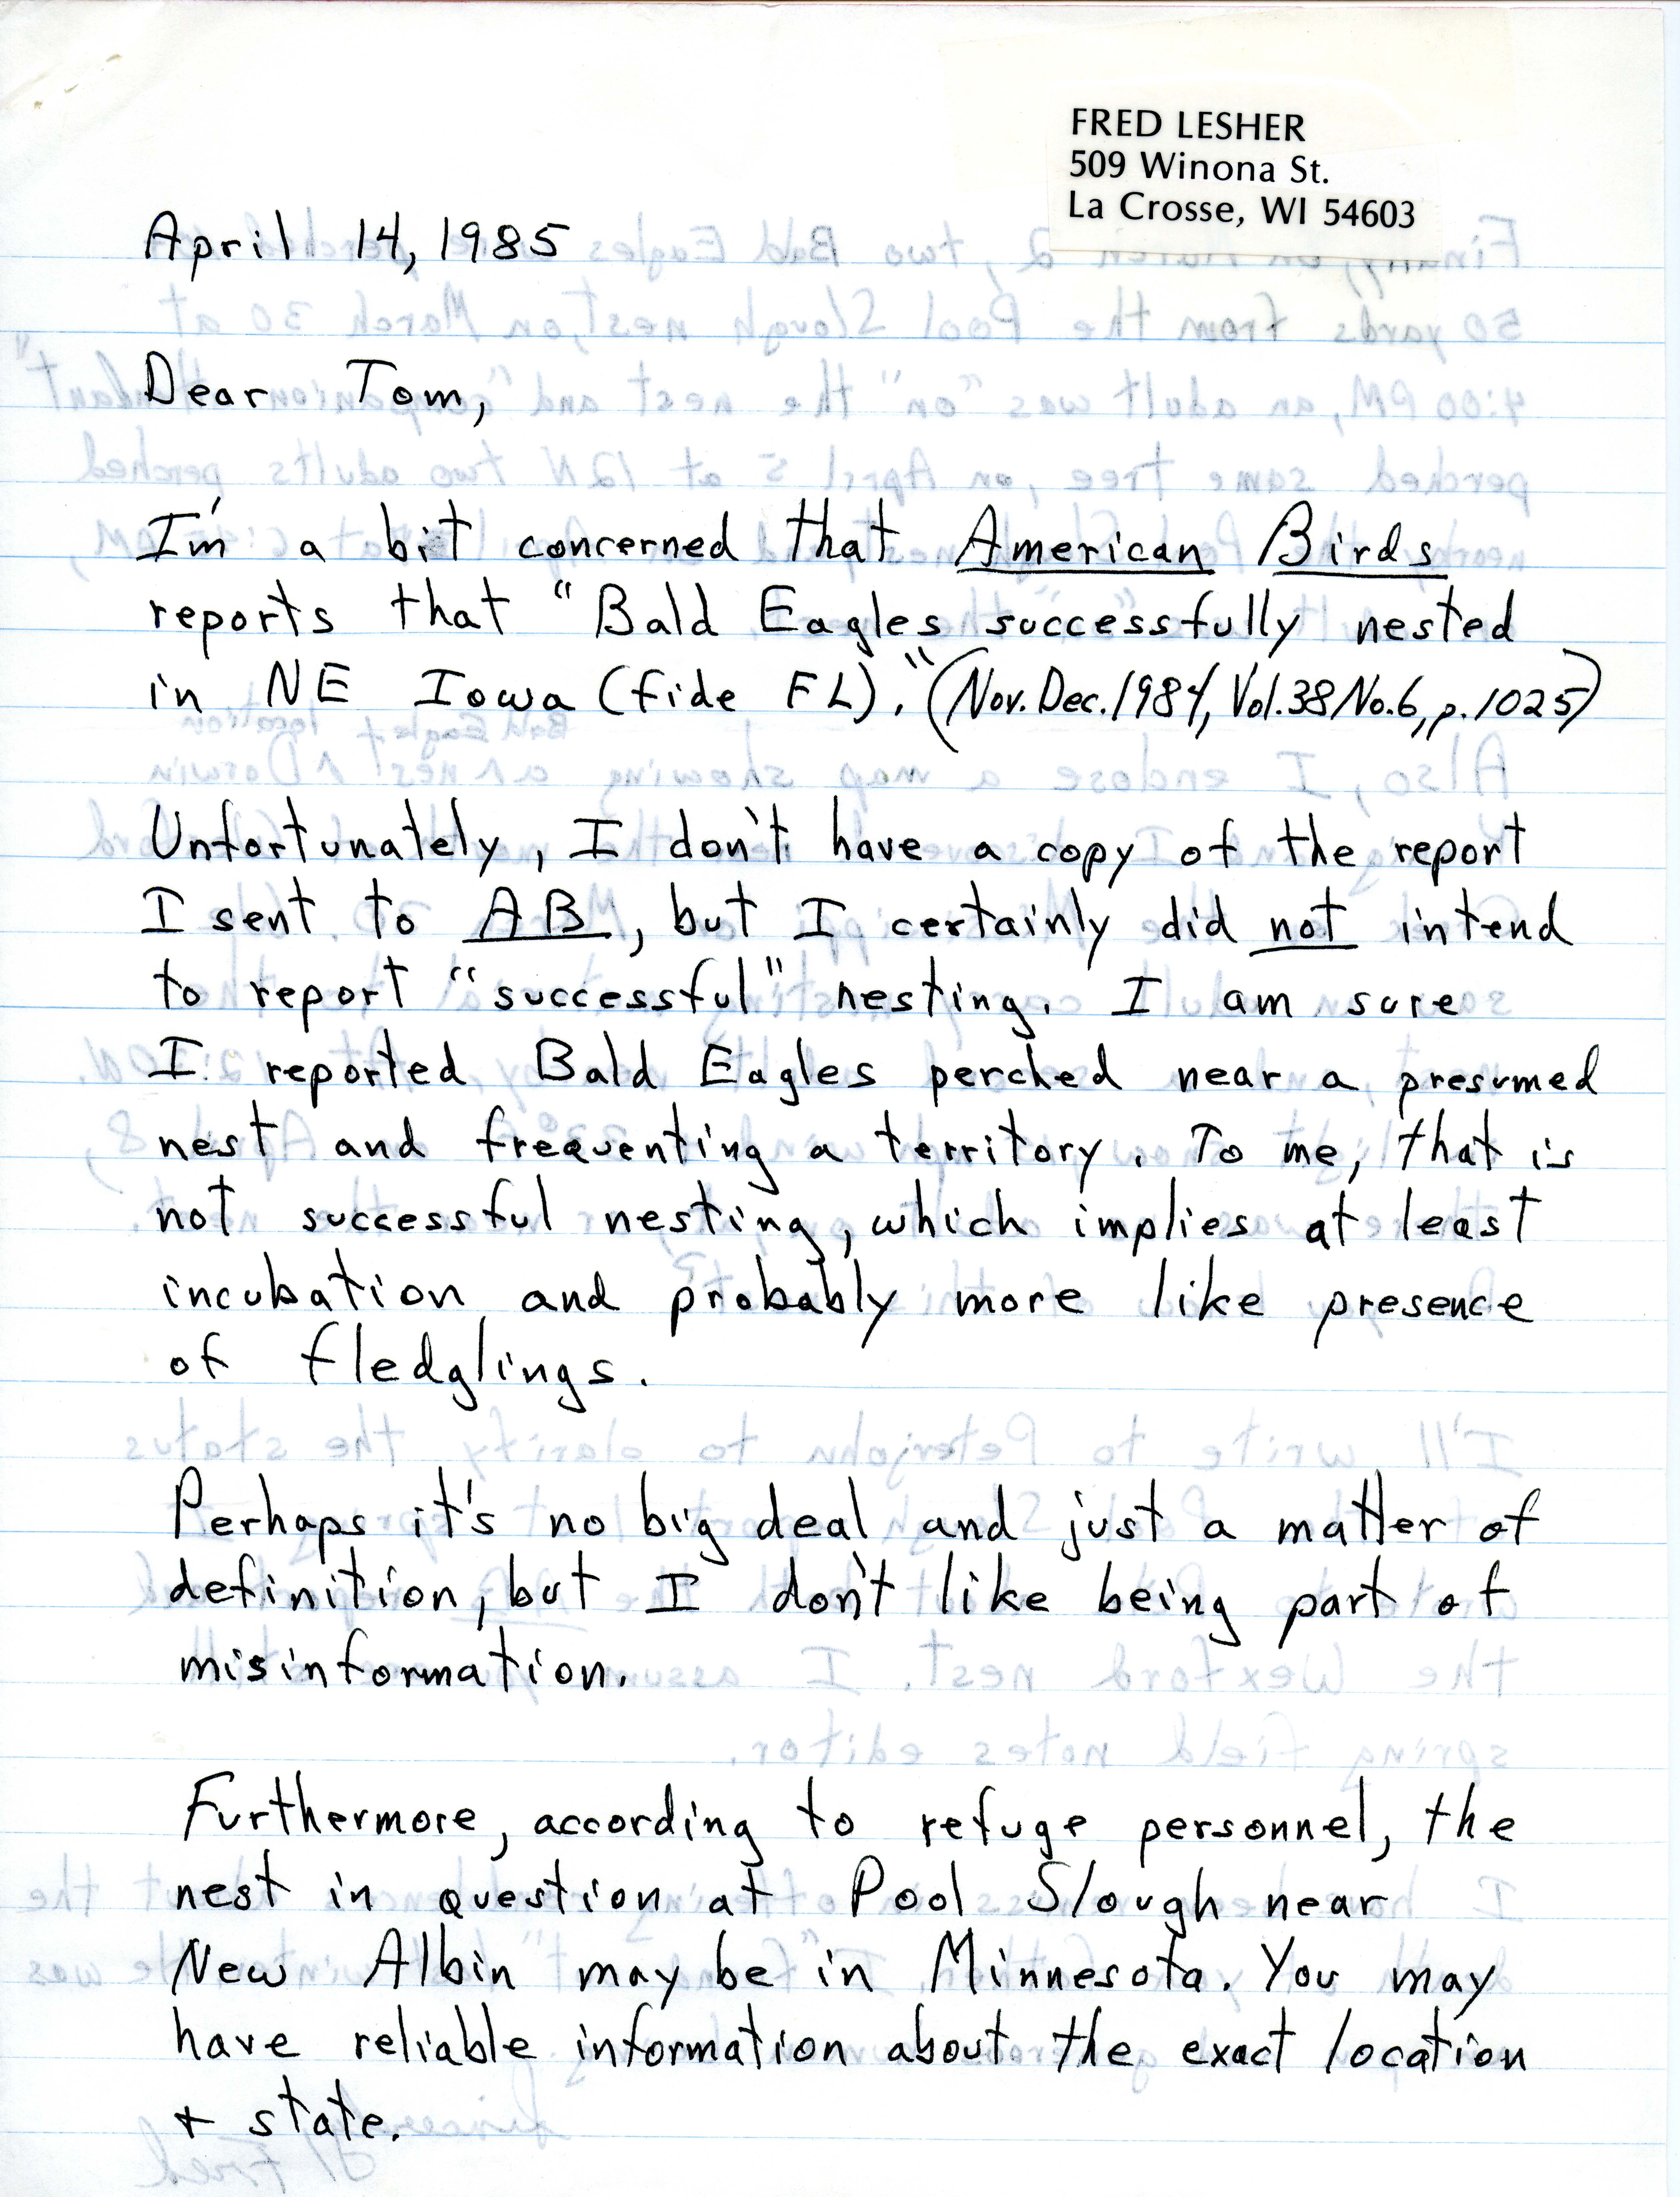 Fred Lesher letter to Thomas H. Kent regarding bald eagle nests, April 14, 1985